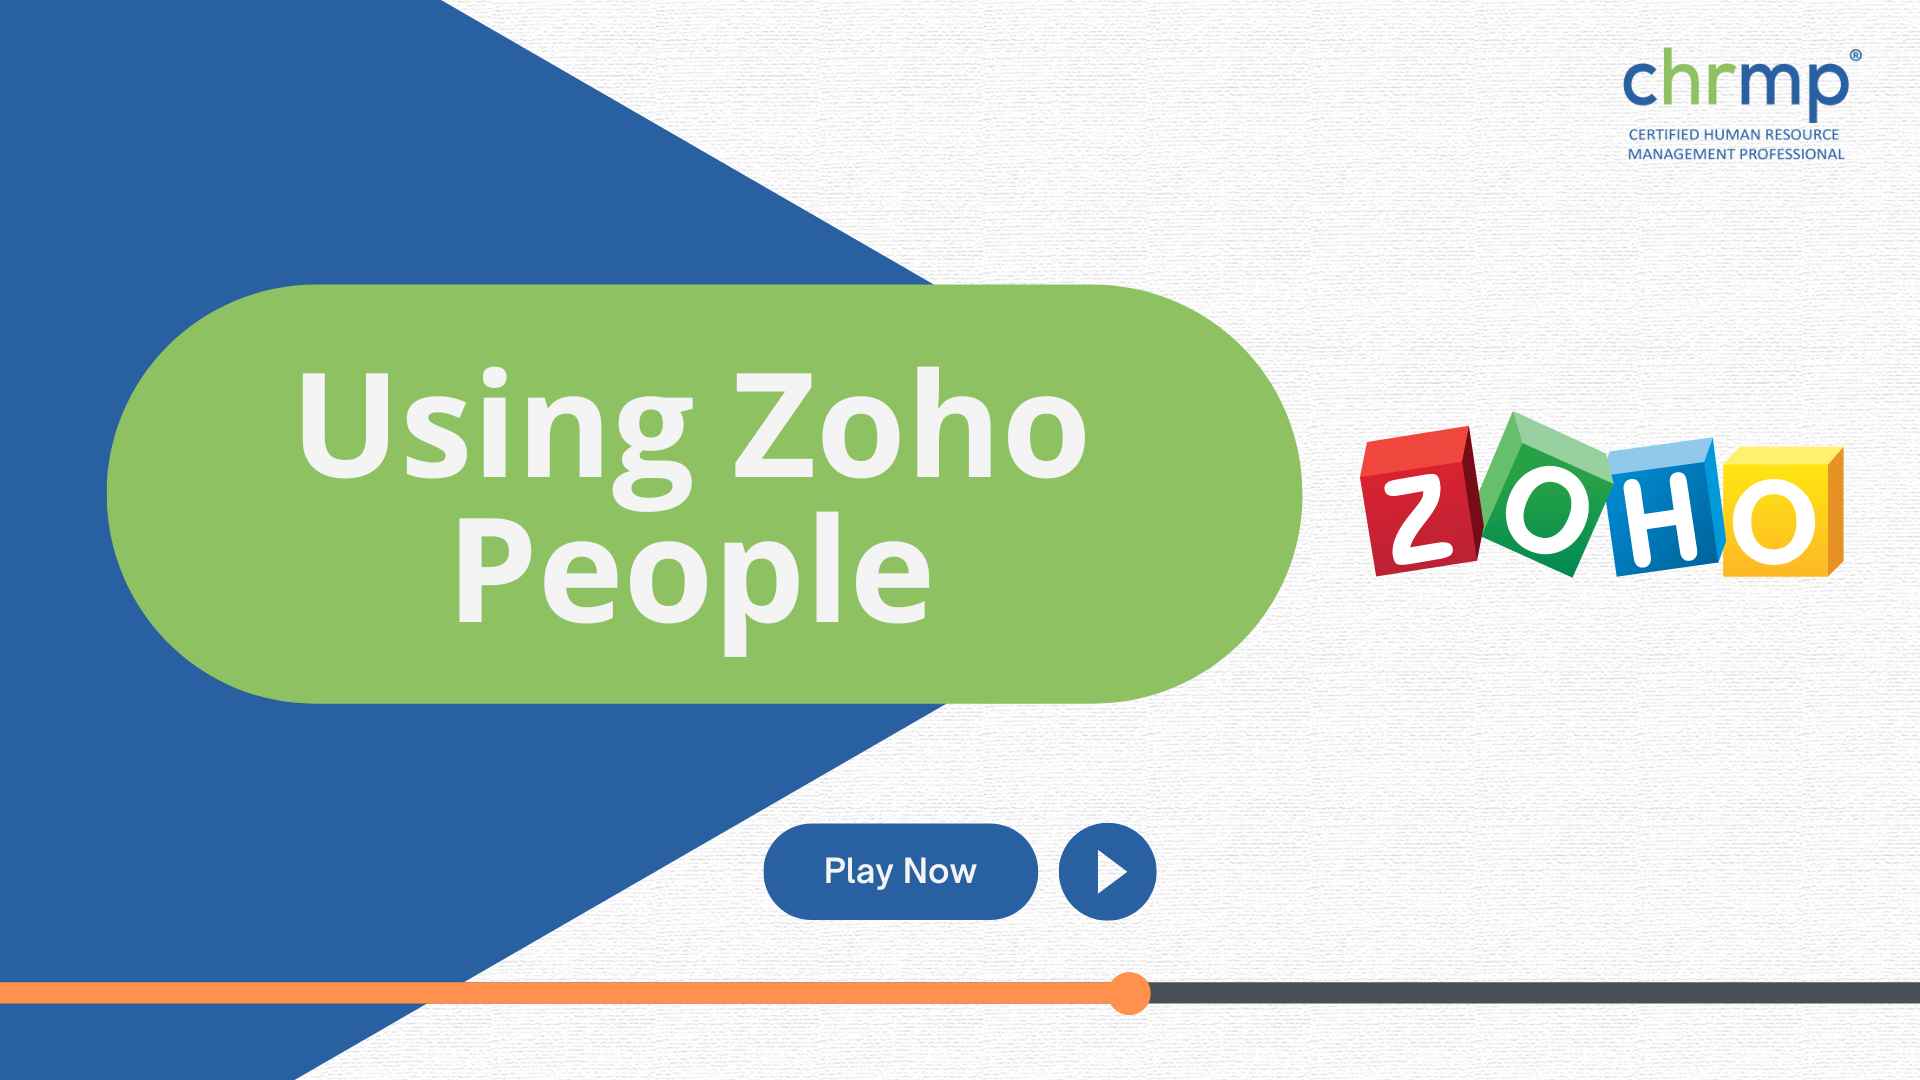 Using zoho people